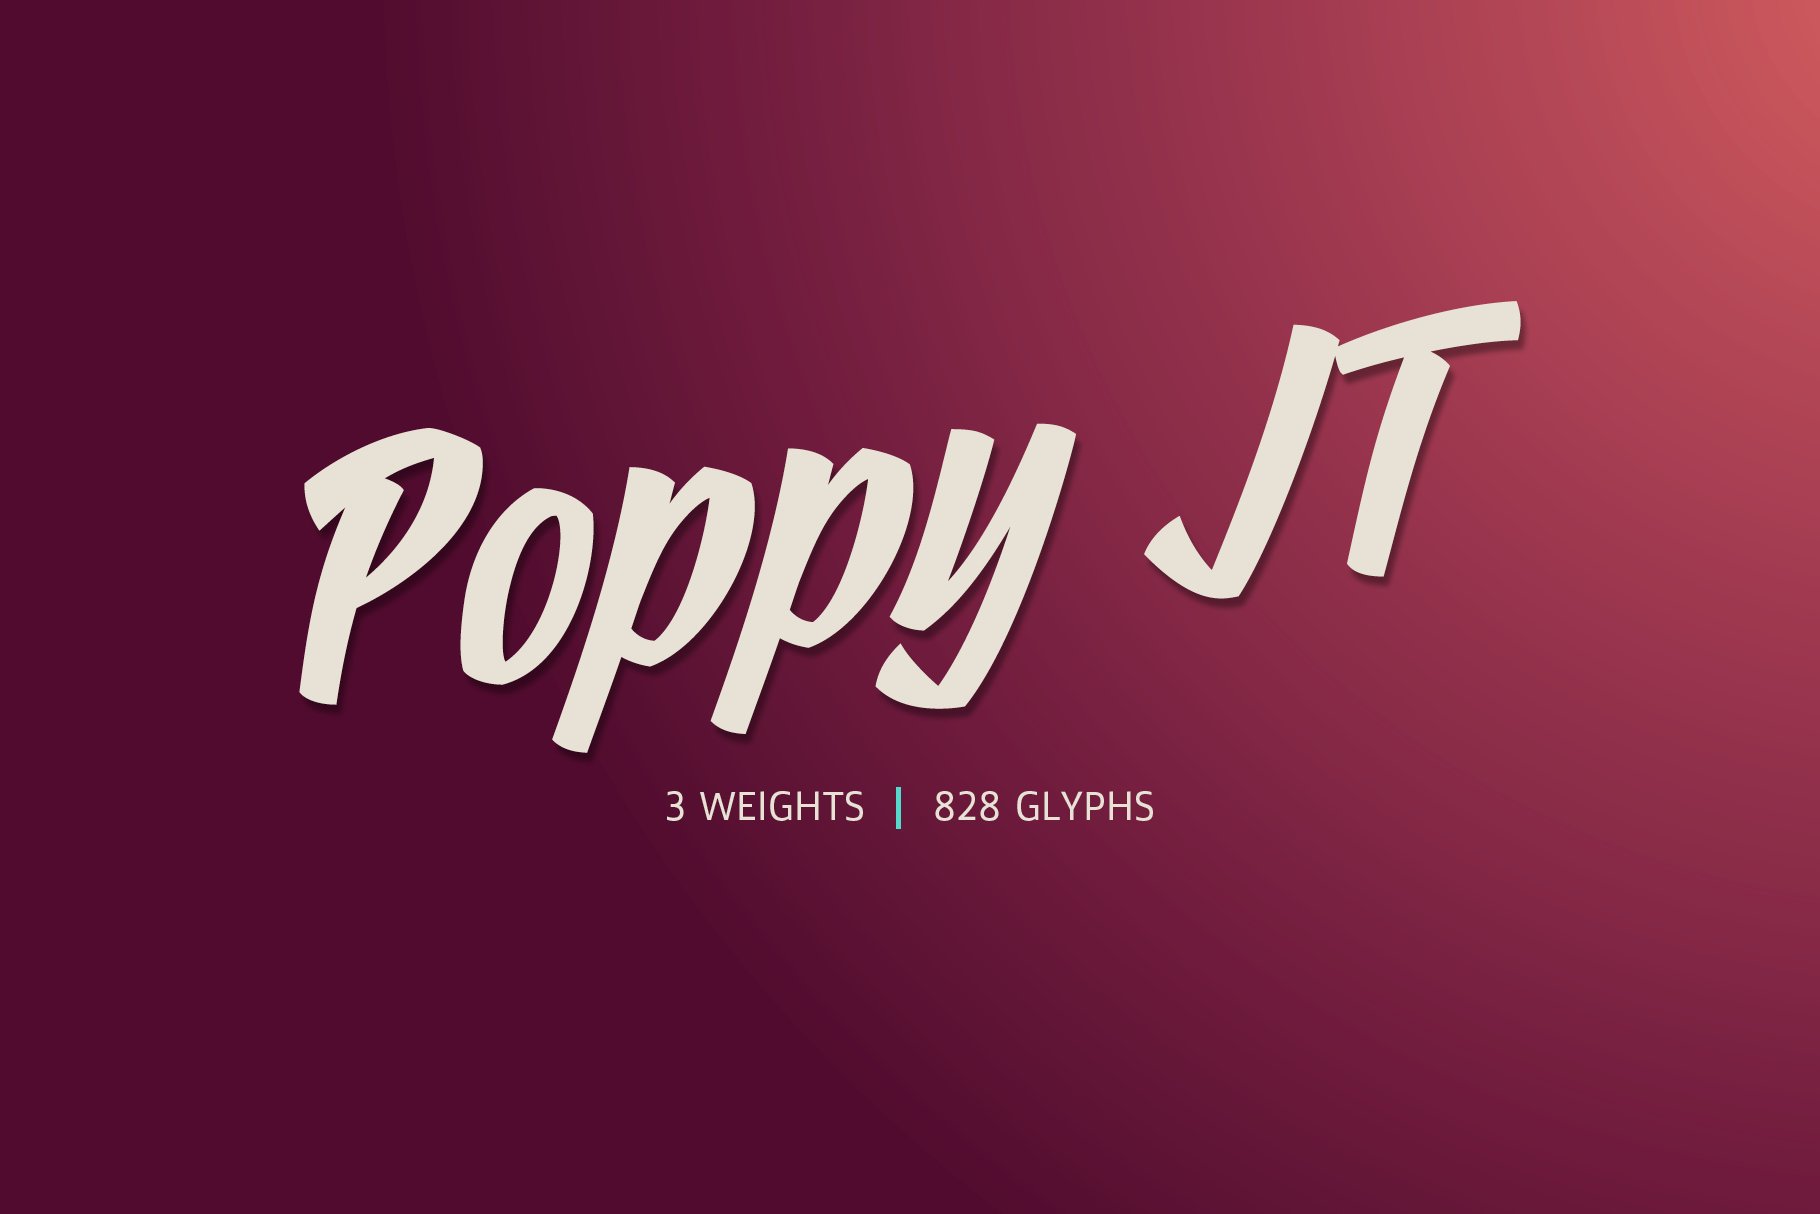 Poppy JT cover image.